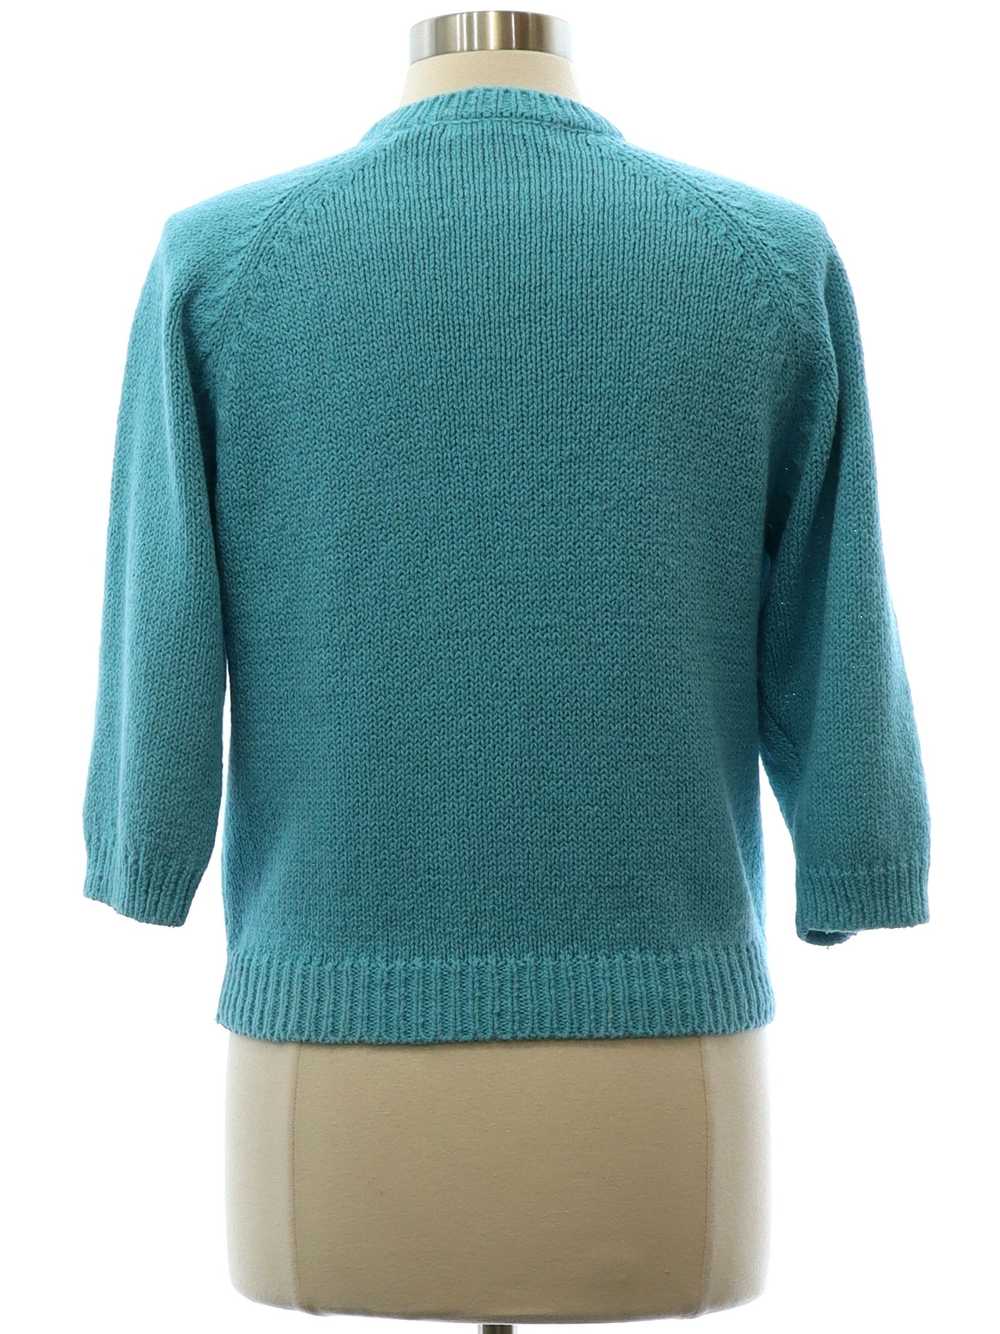 1980's Le Moda Womens Mod Sweater - image 3